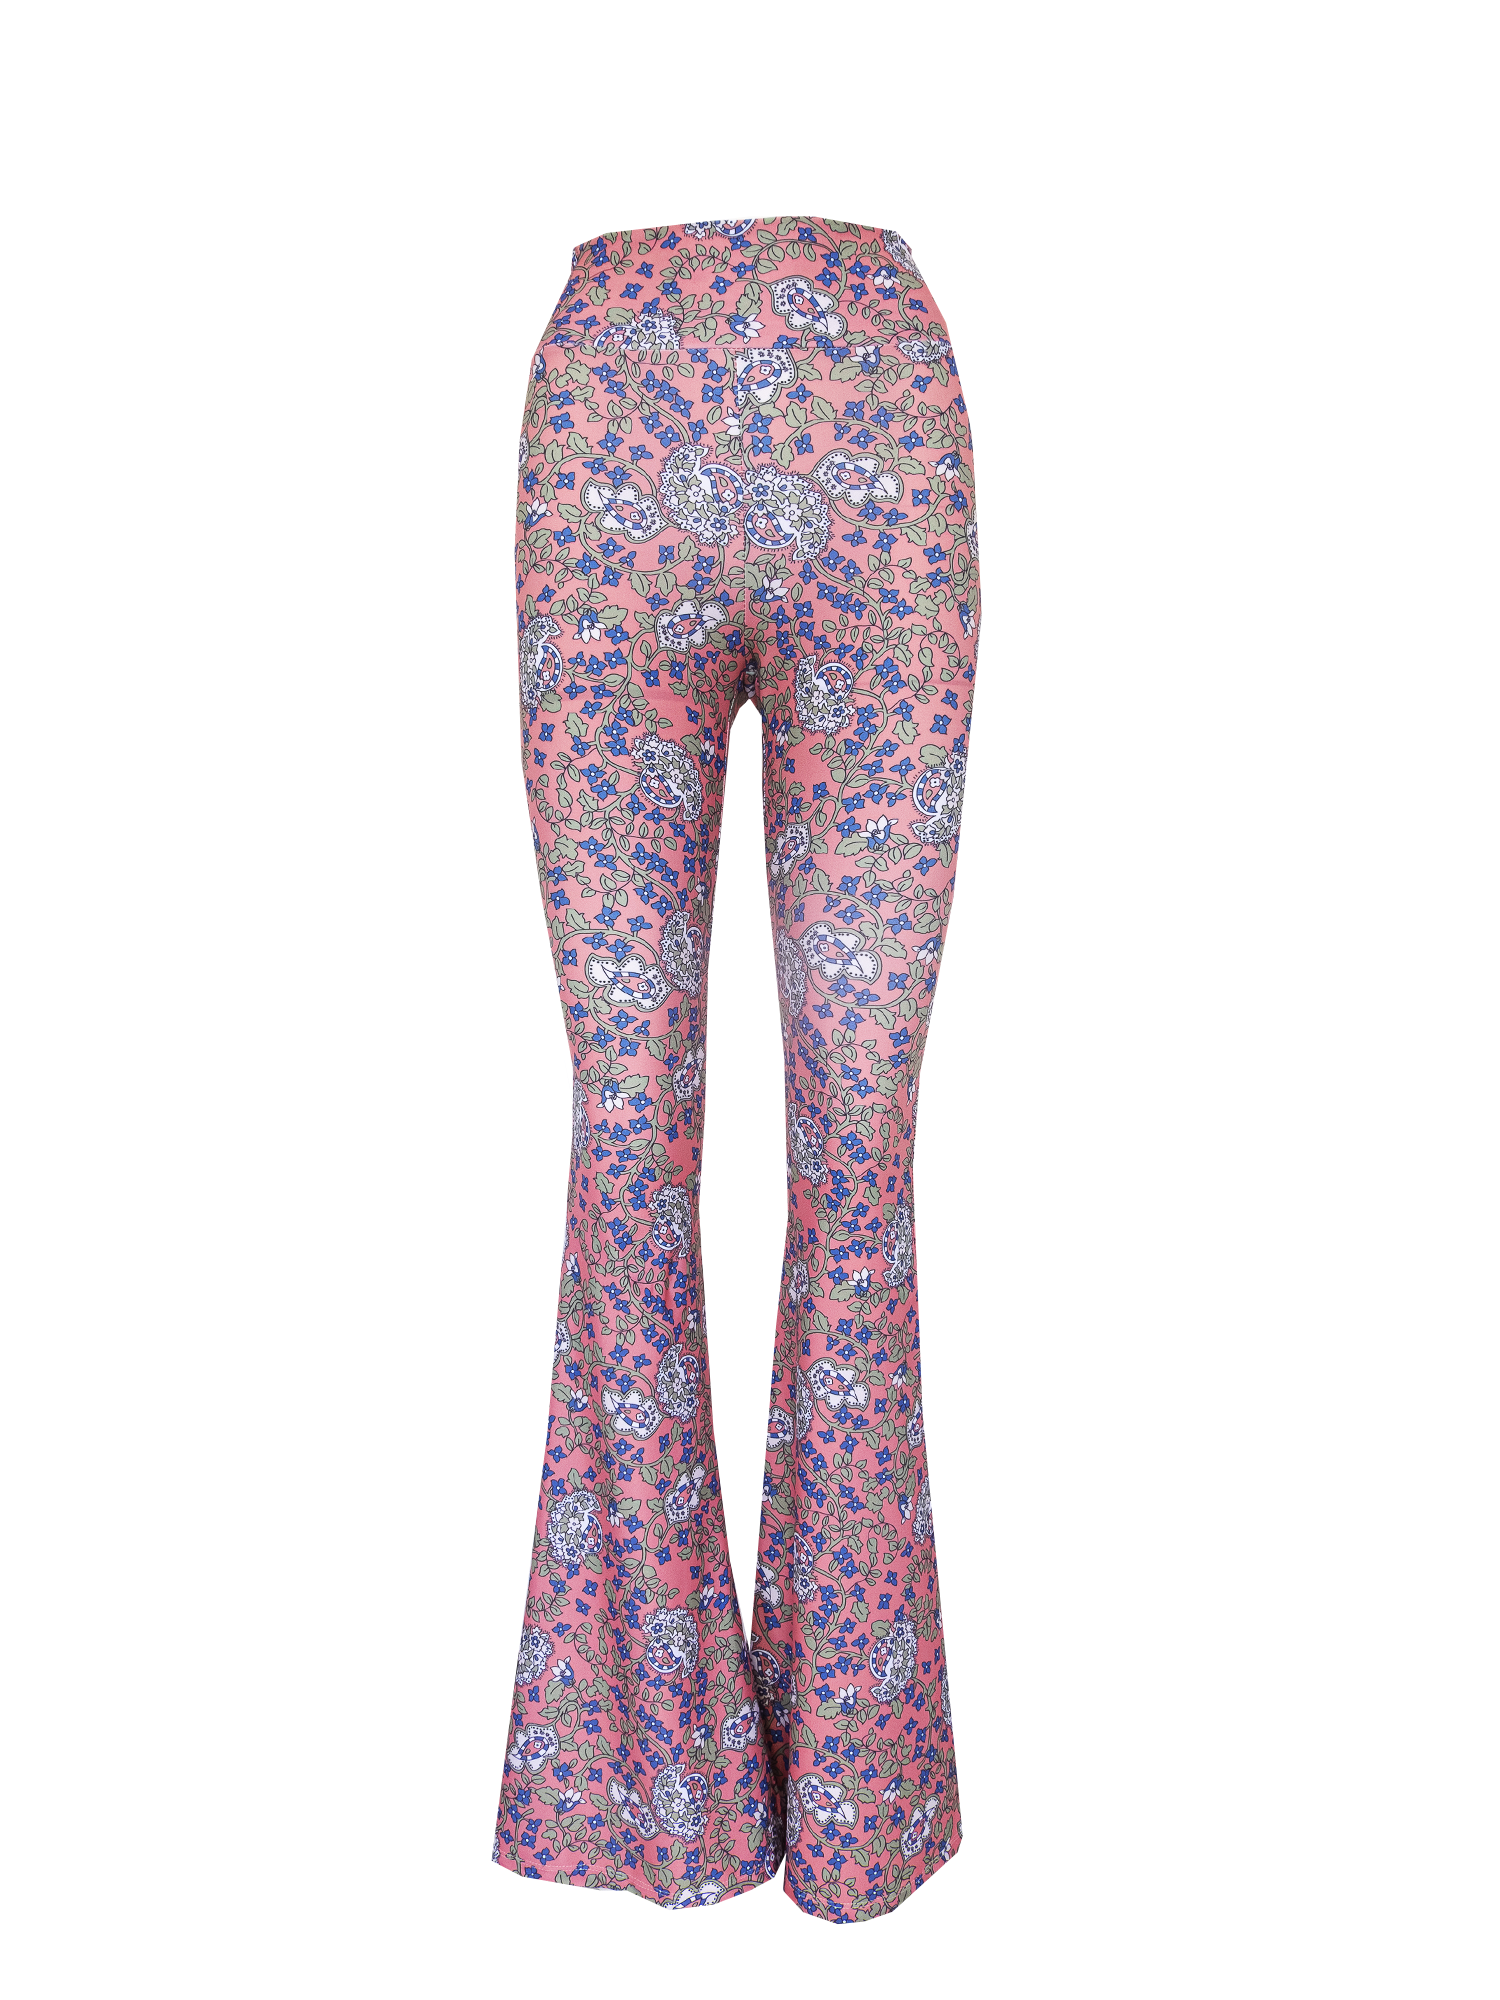 LOLA - flared pants in Butchart patterned lycra